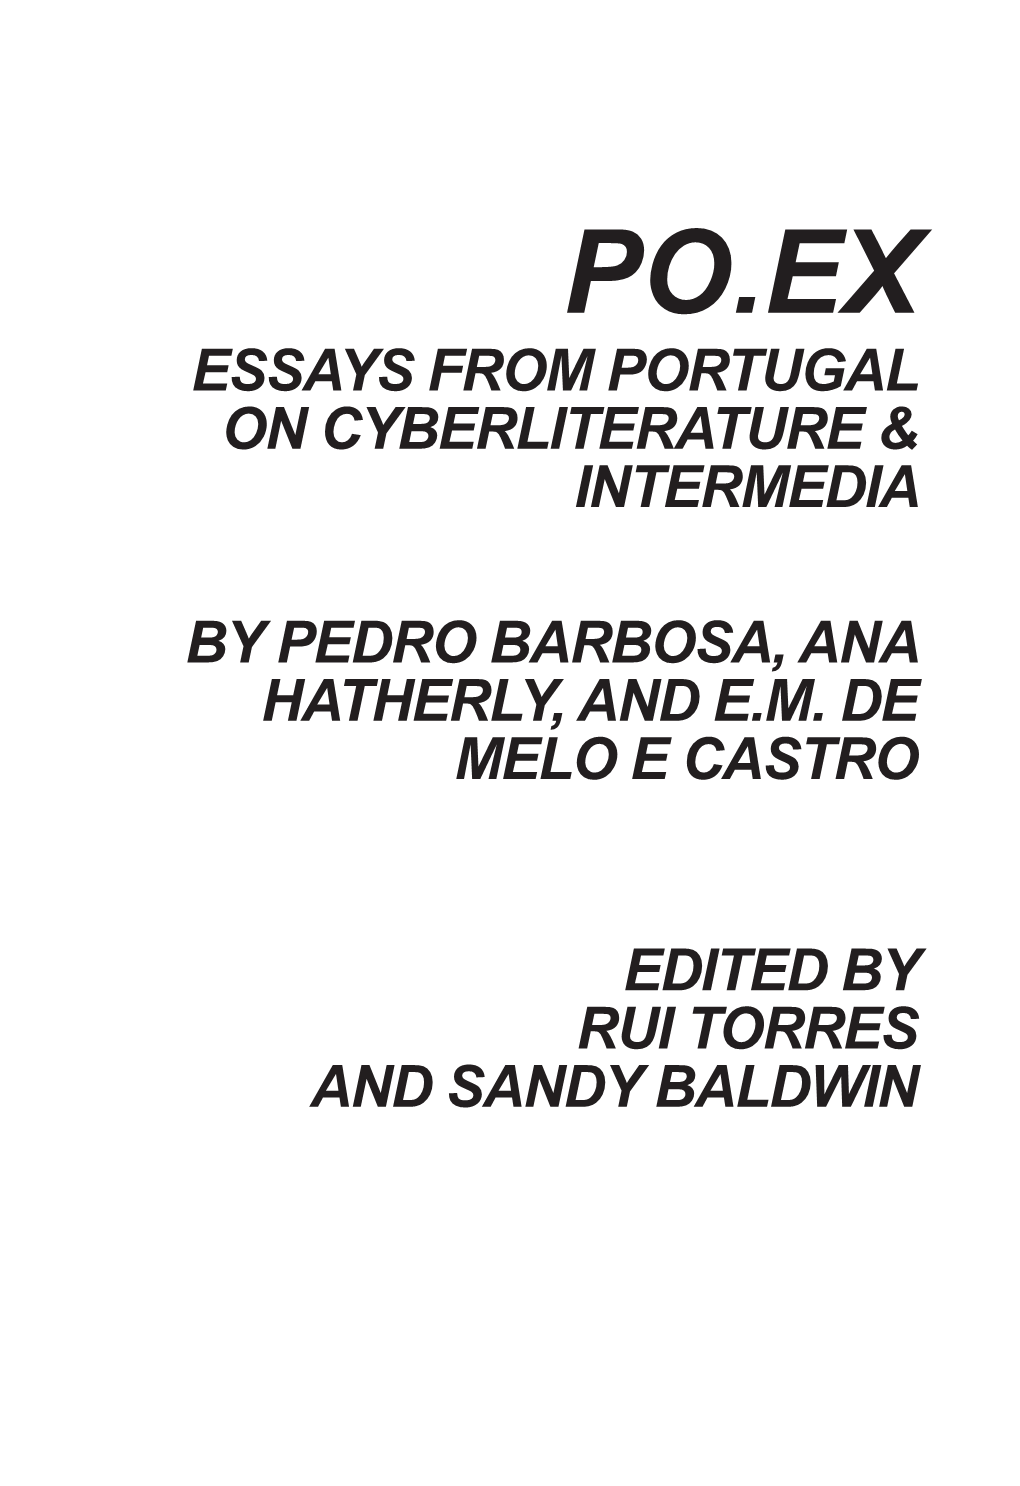 Essays from Portugal on Cyberliterature & Intermedia